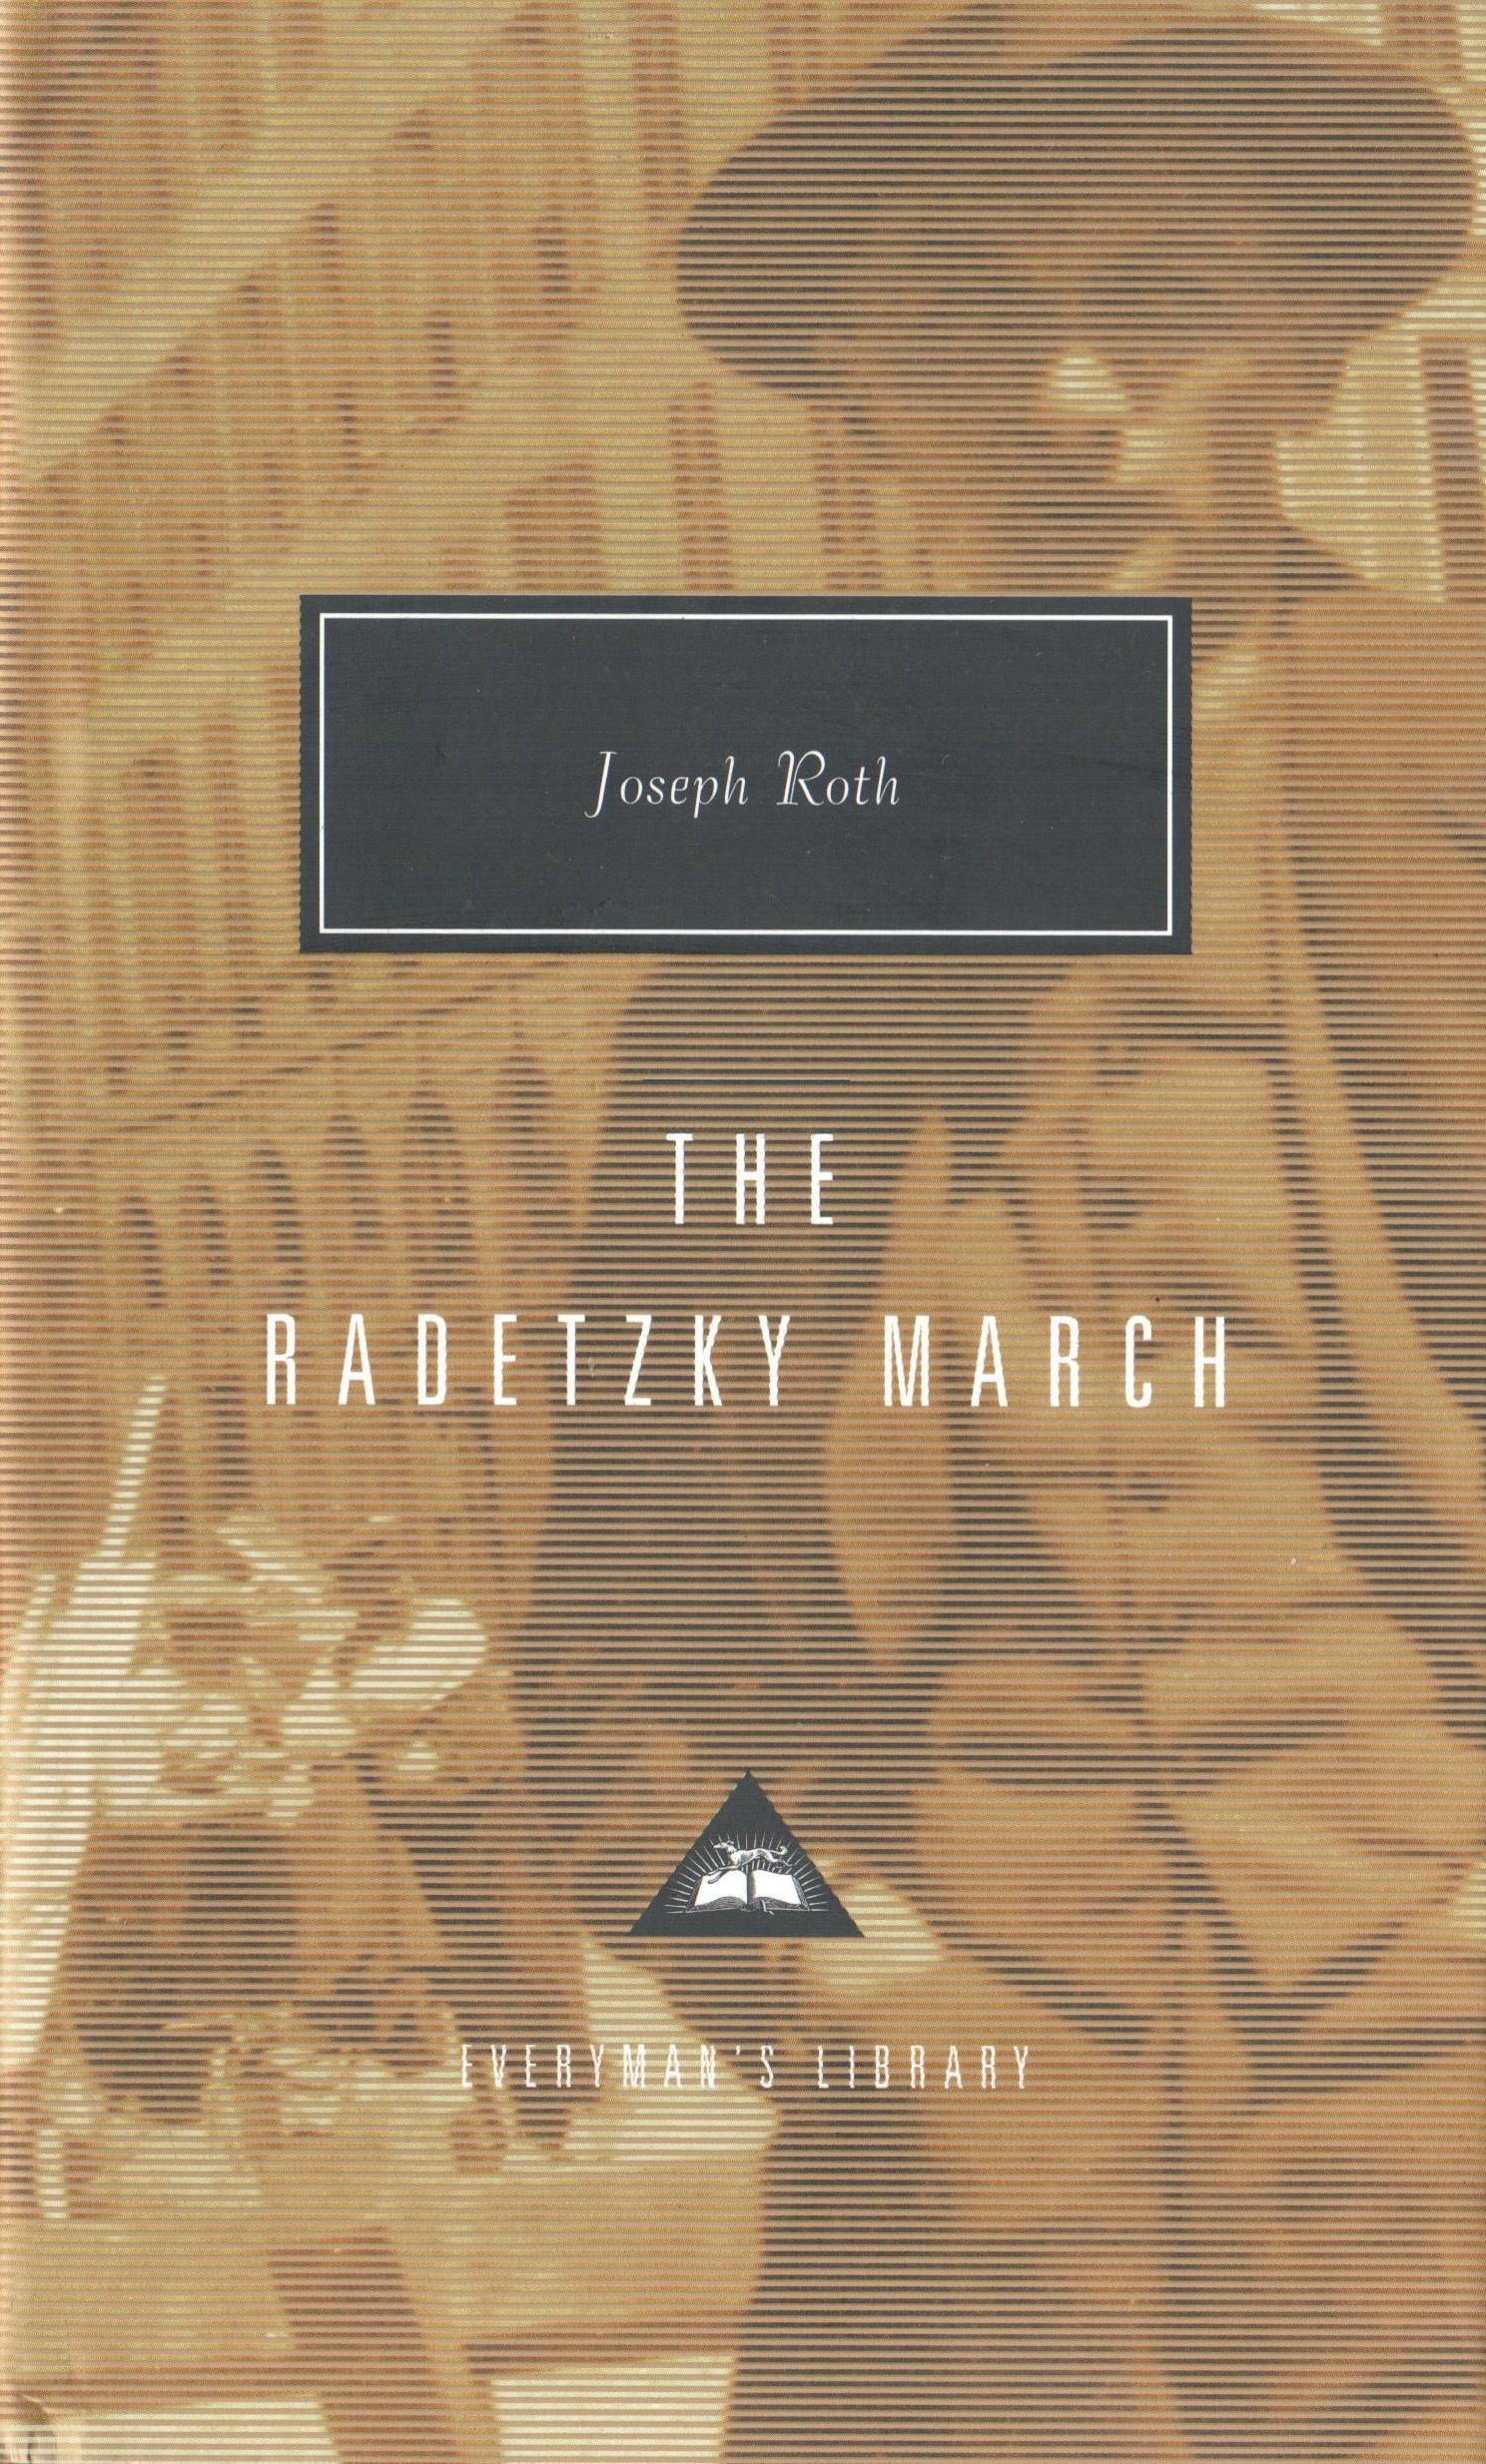 Radetzky March - Joseph Roth